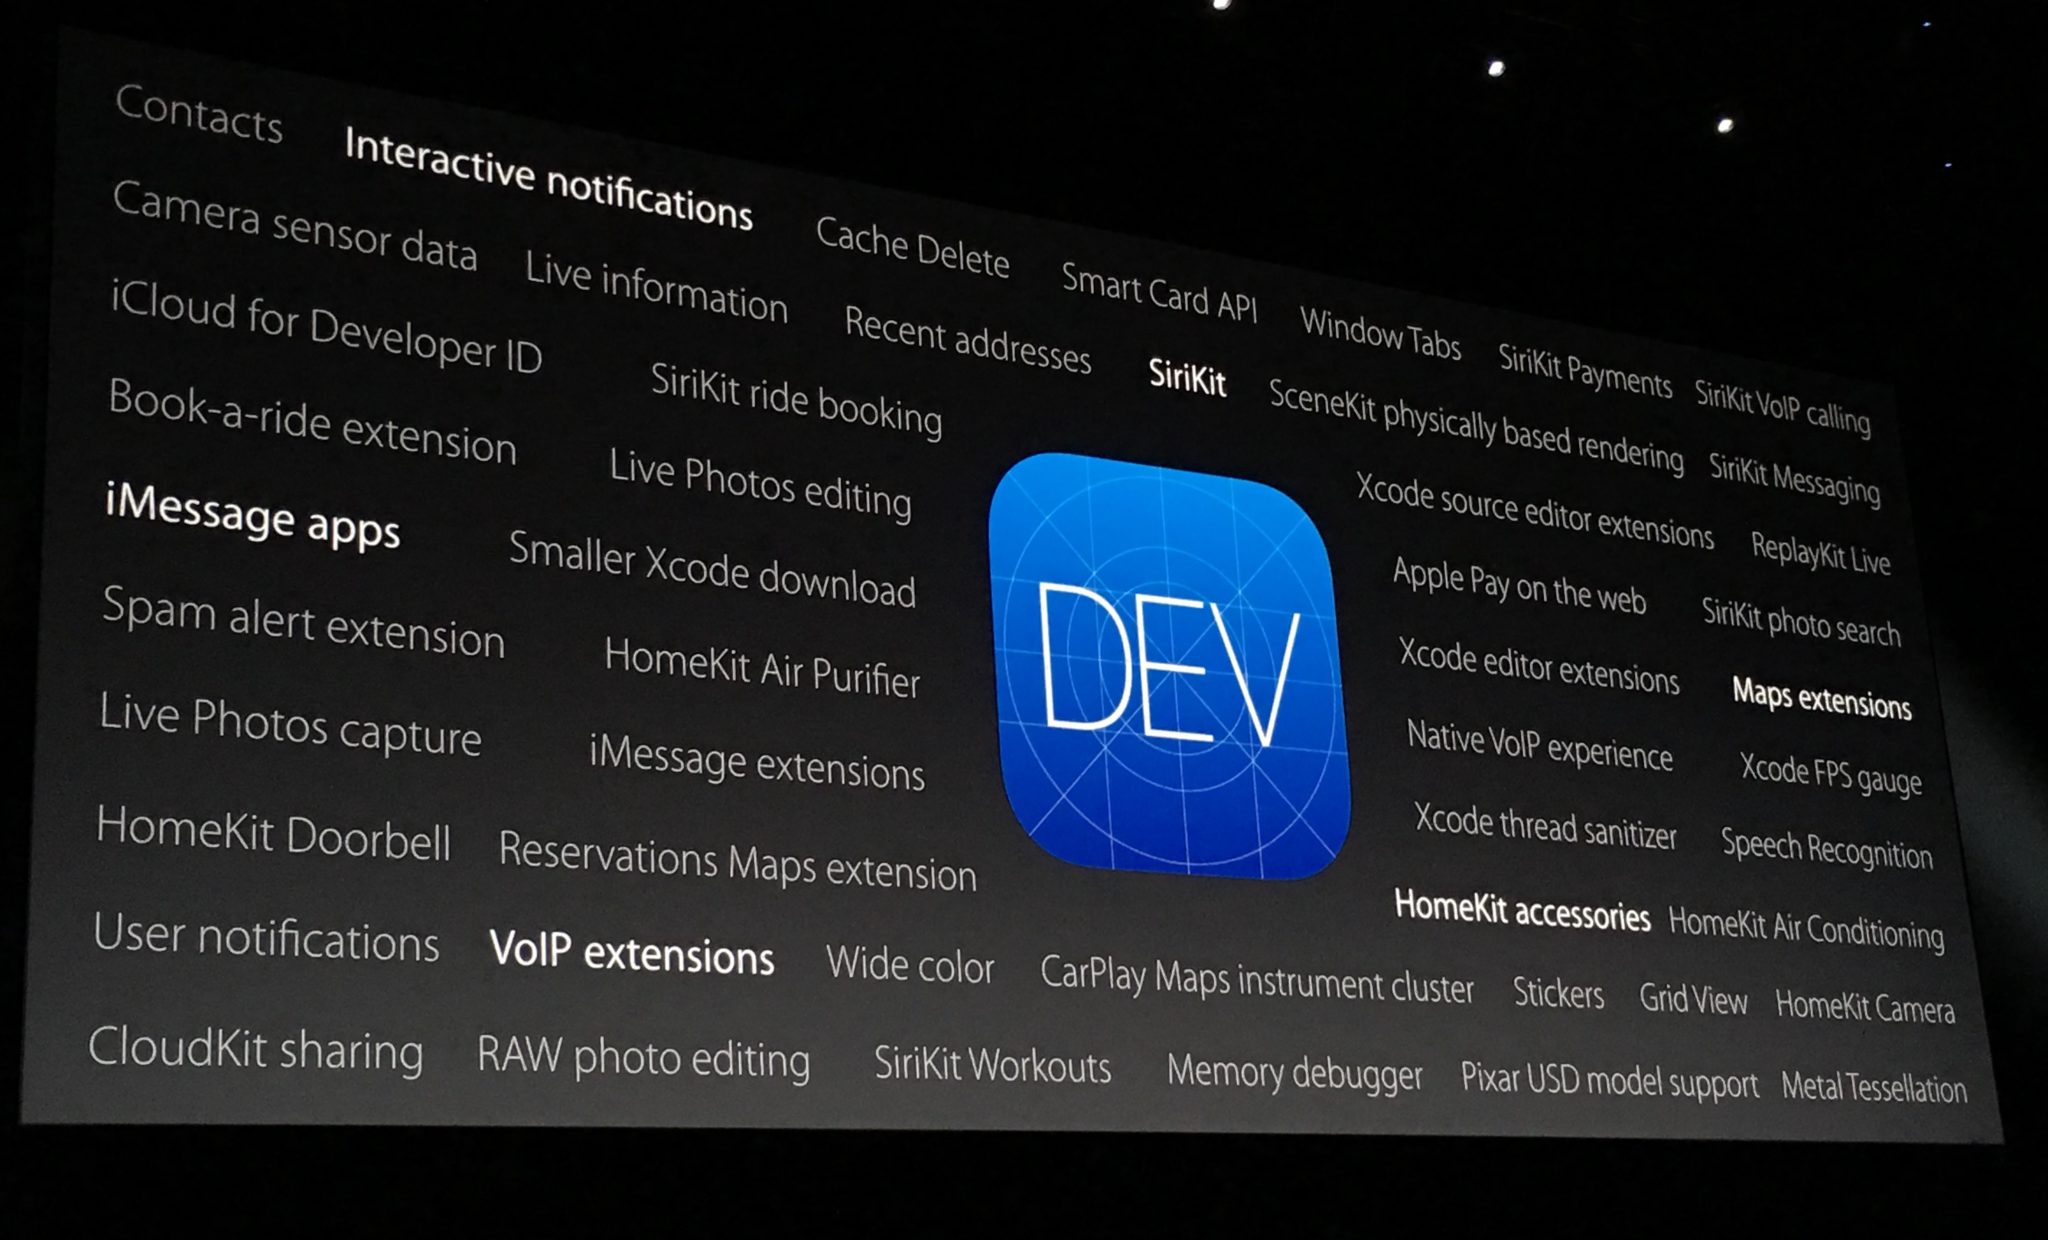 iOS Developer slide at WWDC 2016